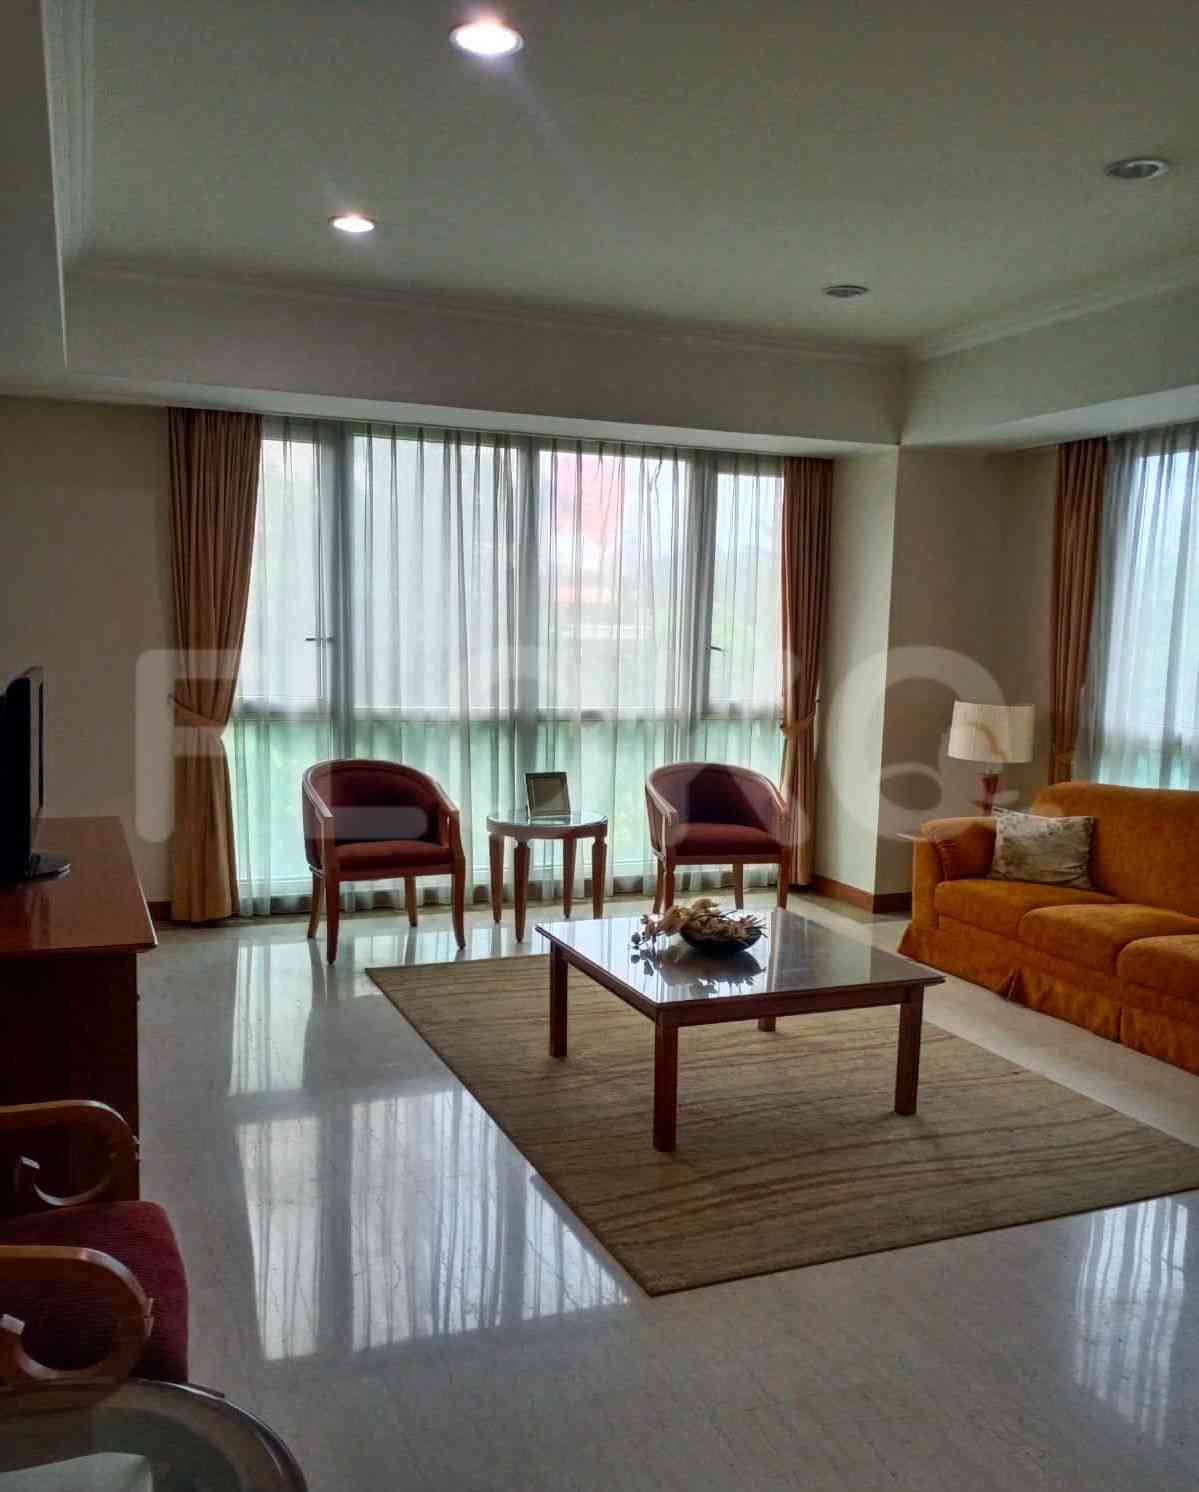 3 Bedroom on 2nd Floor for Rent in Casablanca Apartment - fte11b 4